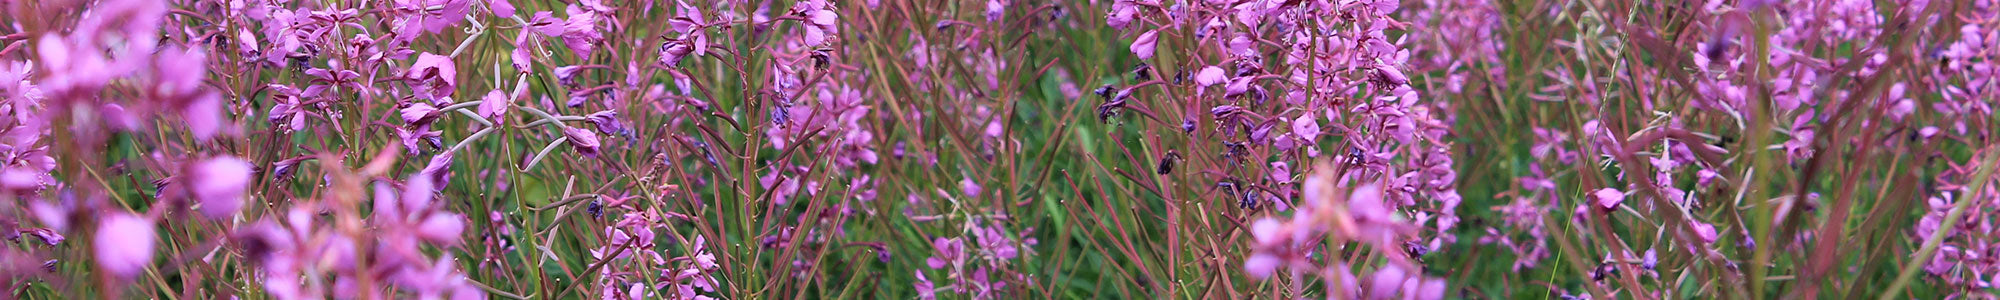 Menopause depicted by field of purple flowers